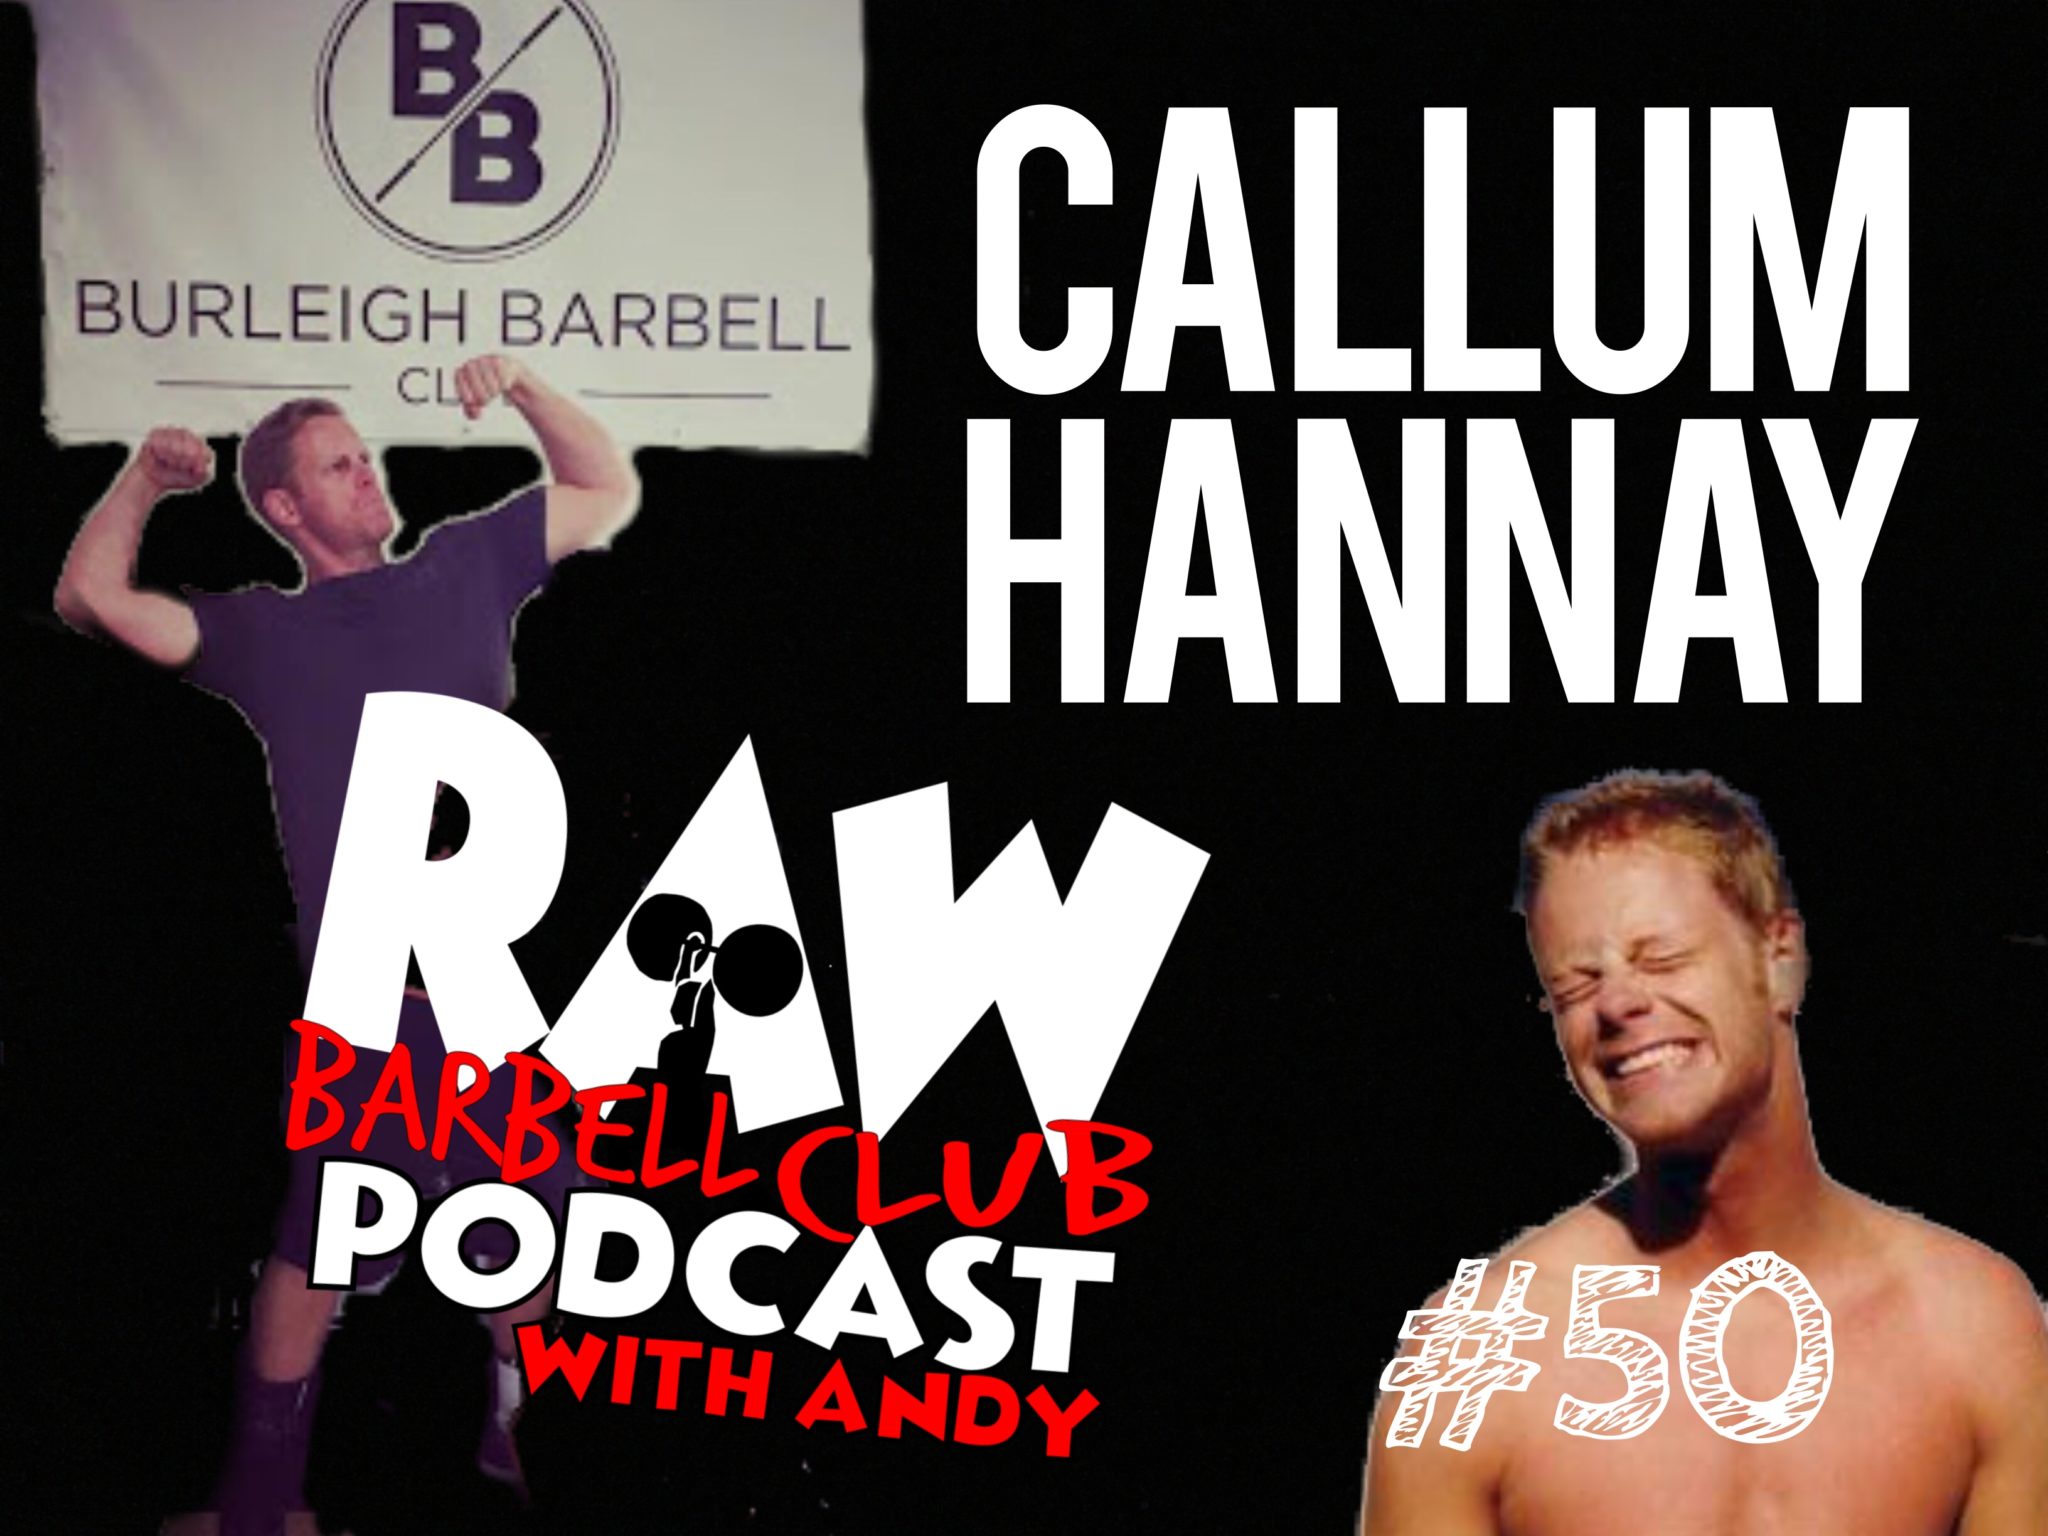 Callum Hanny Raw barbell club podcast